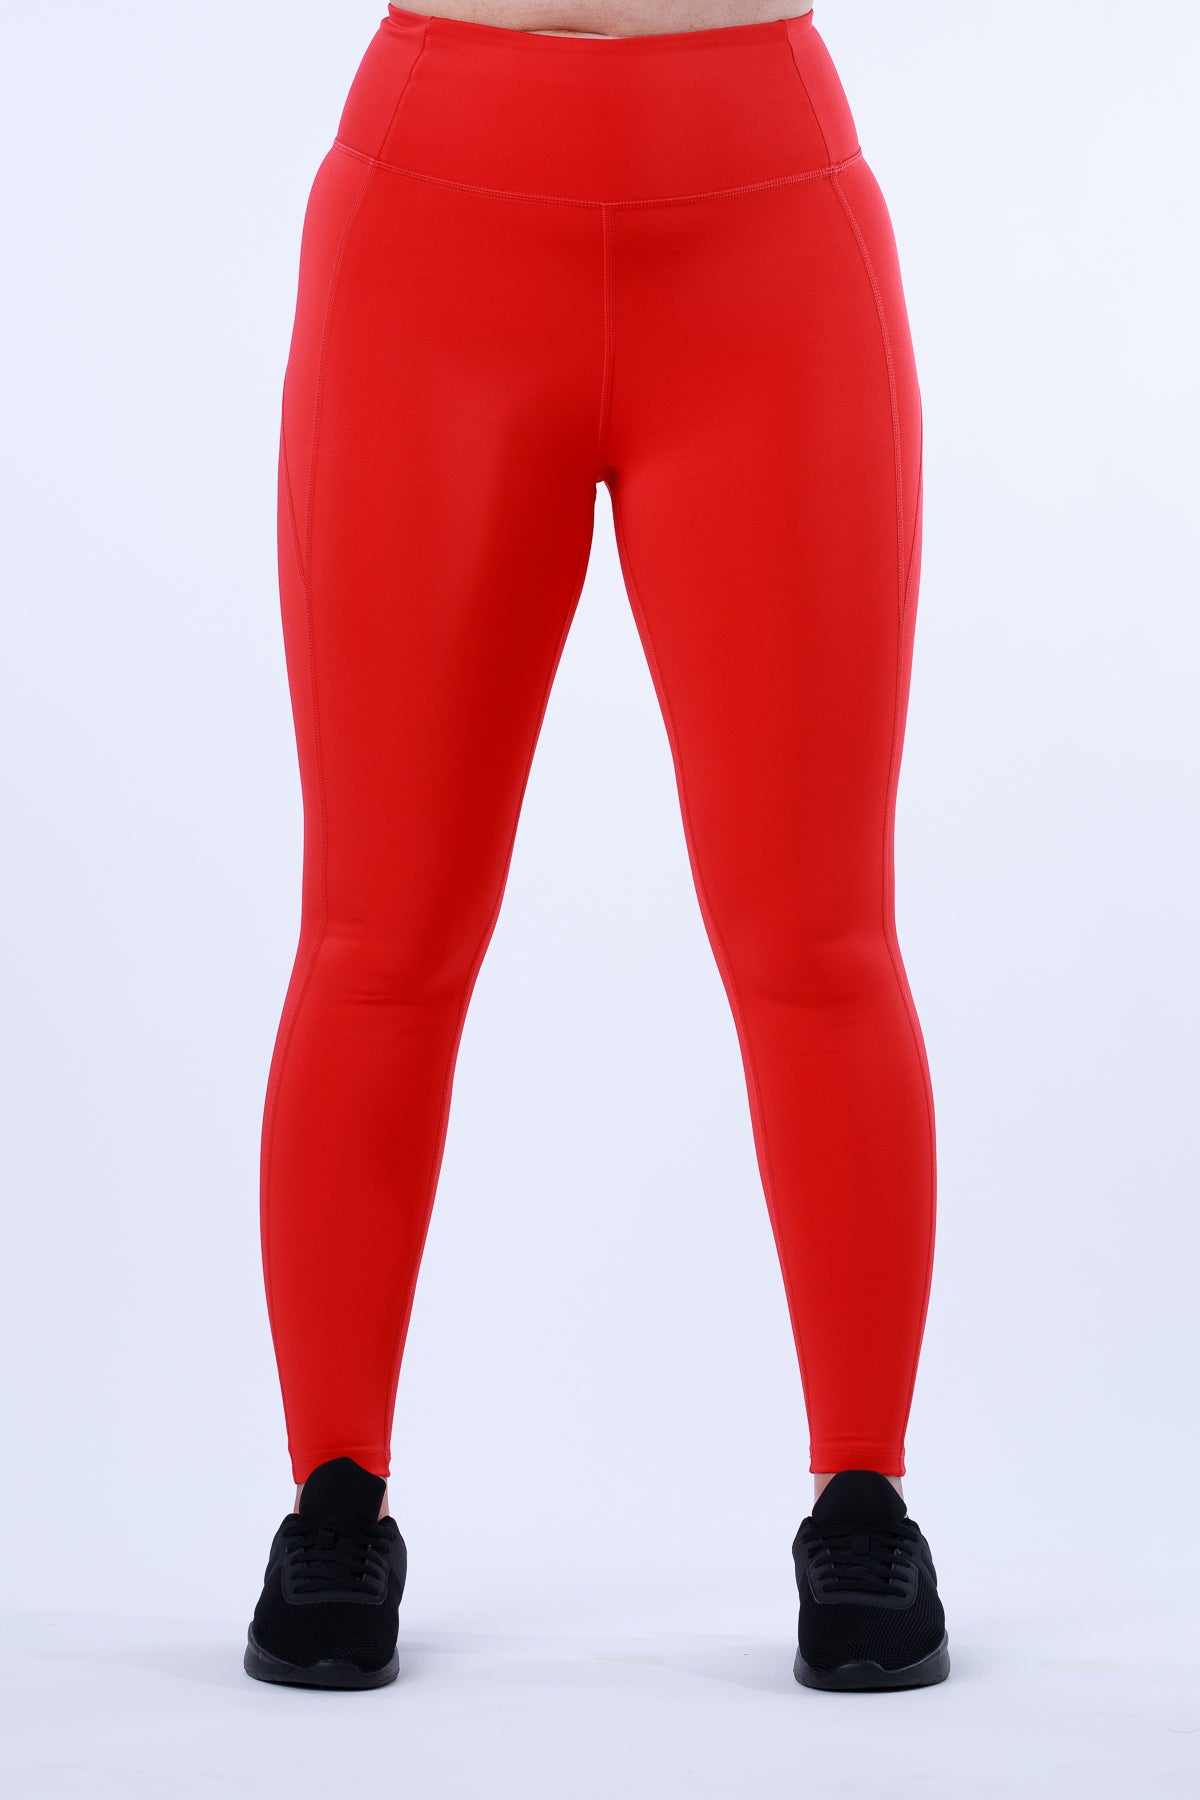 Red Leggings - Buy Red Leggings Online Starting at Just ₹149